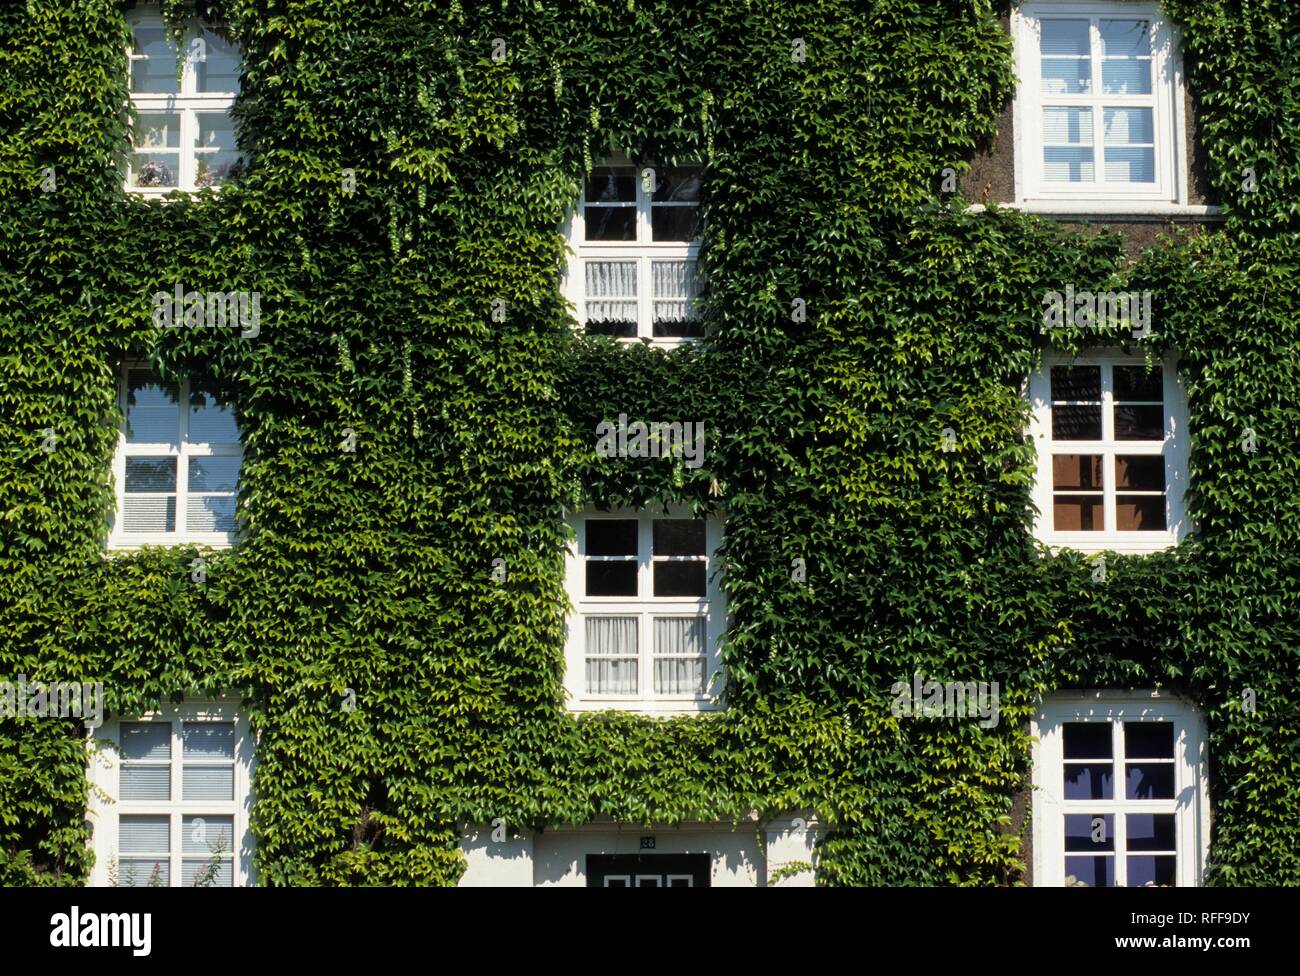 https://c8.alamy.com/comp/RFF9DY/deu-germany-essen-facade-of-a-house-overgrwon-by-ivy-RFF9DY.jpg